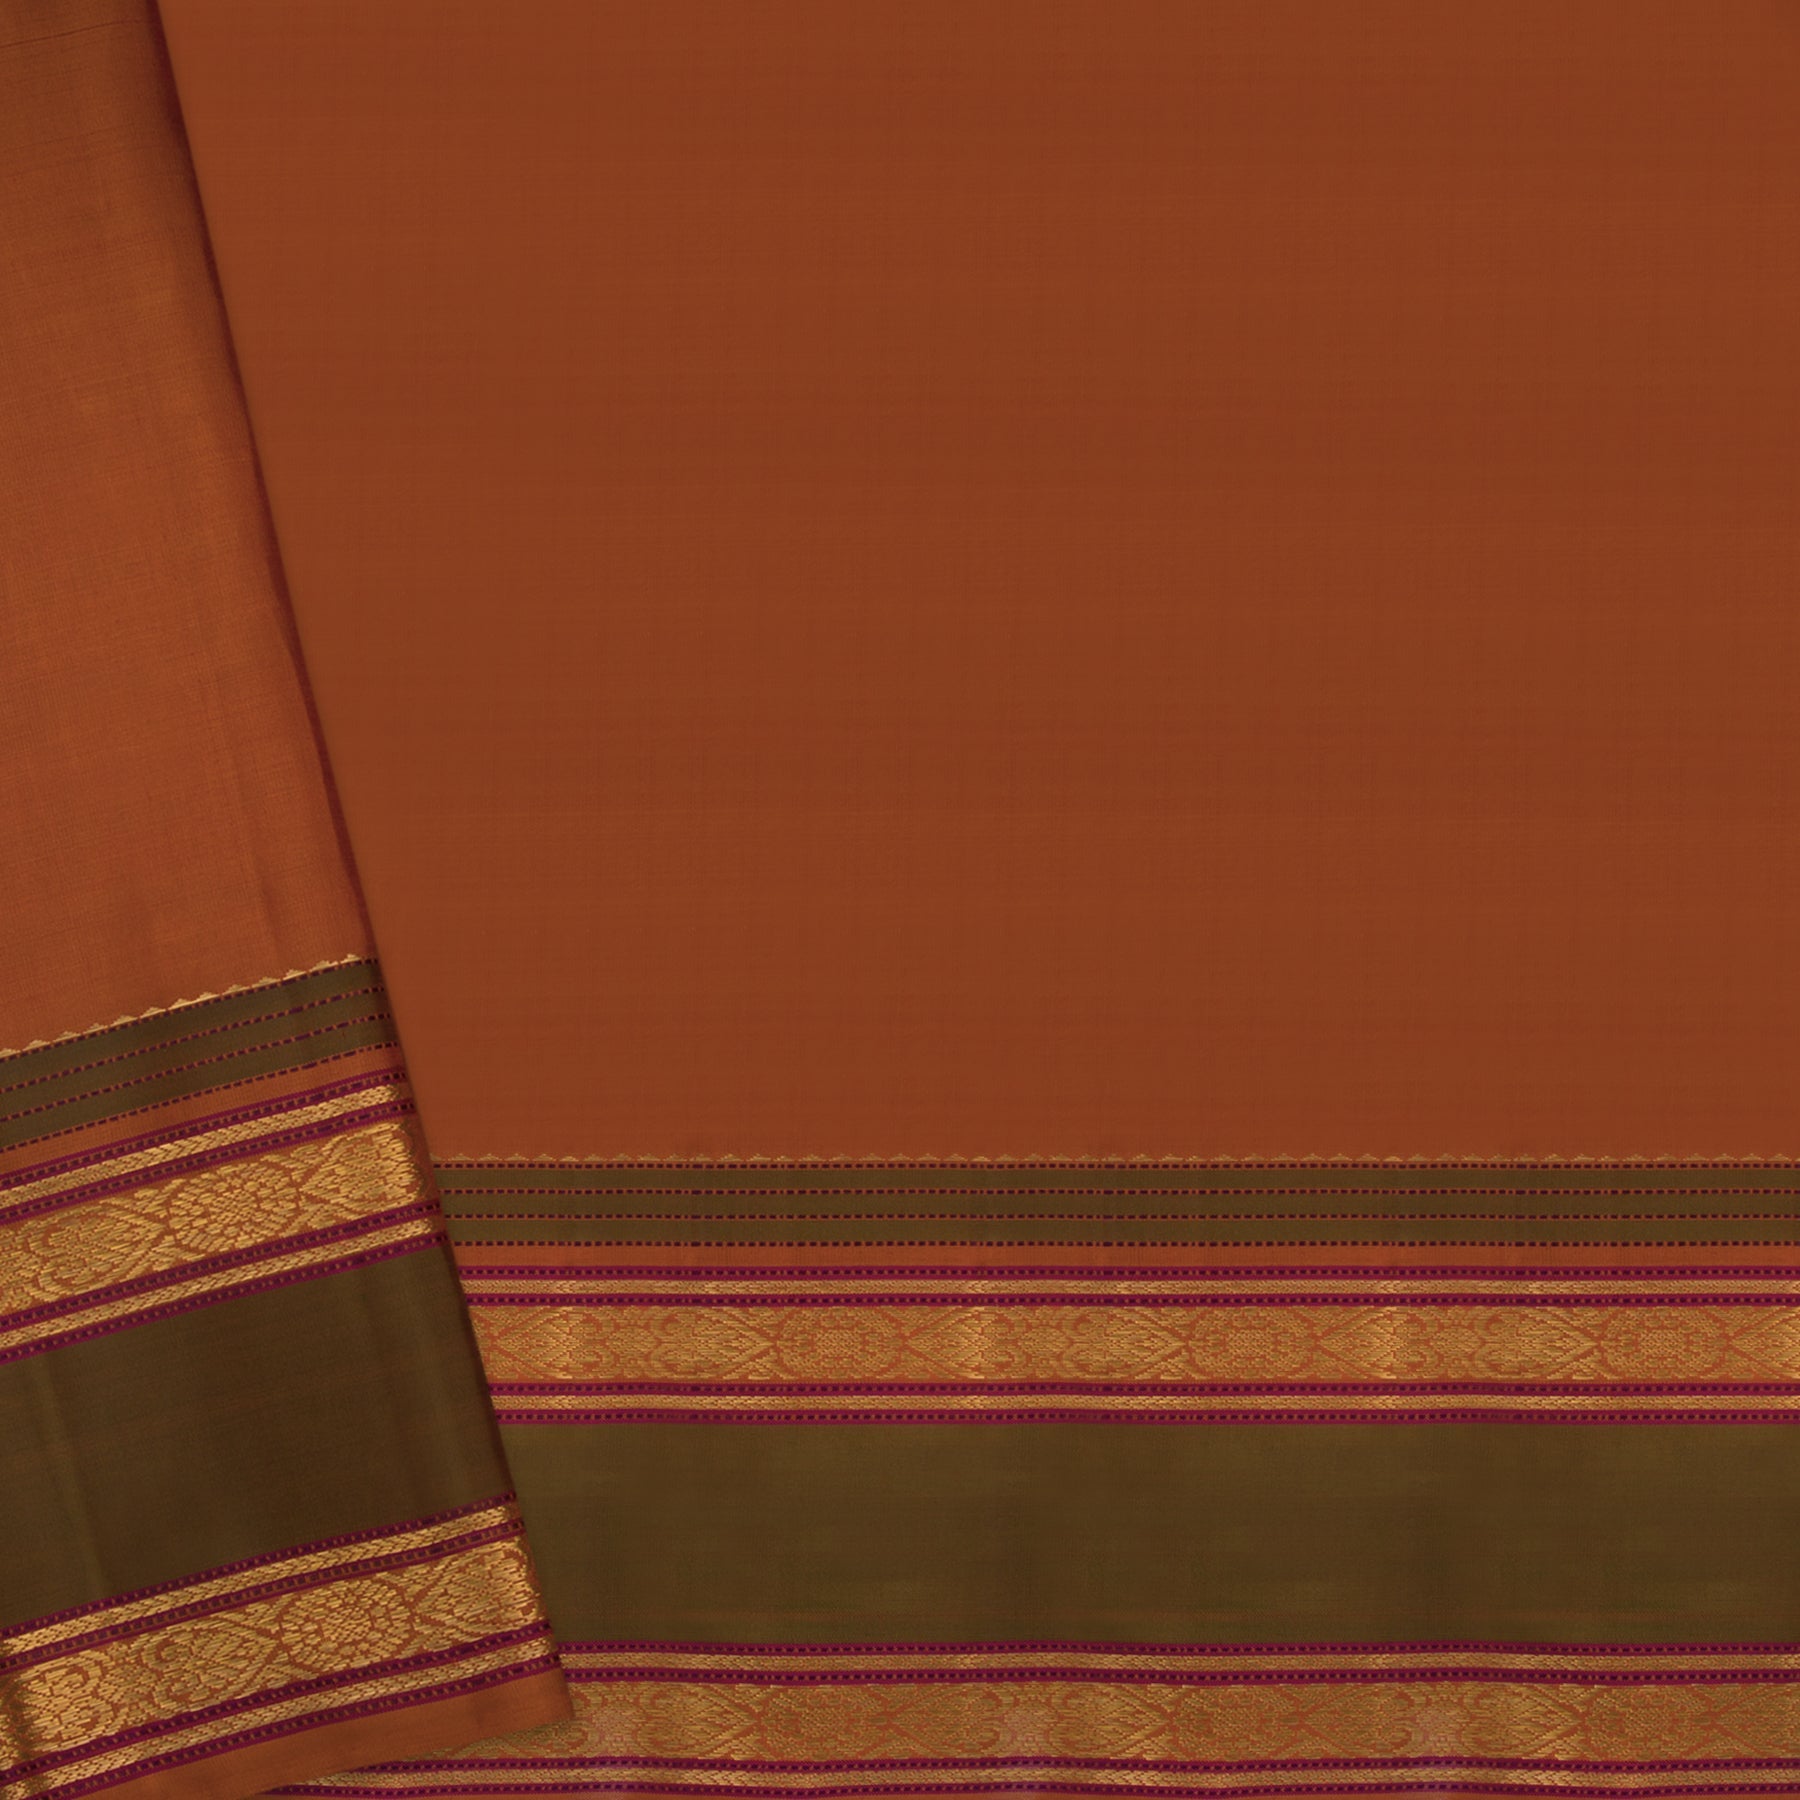 Kanakavalli Kanjivaram Silk Sari 22-040-HS001-13550 - Blouse View